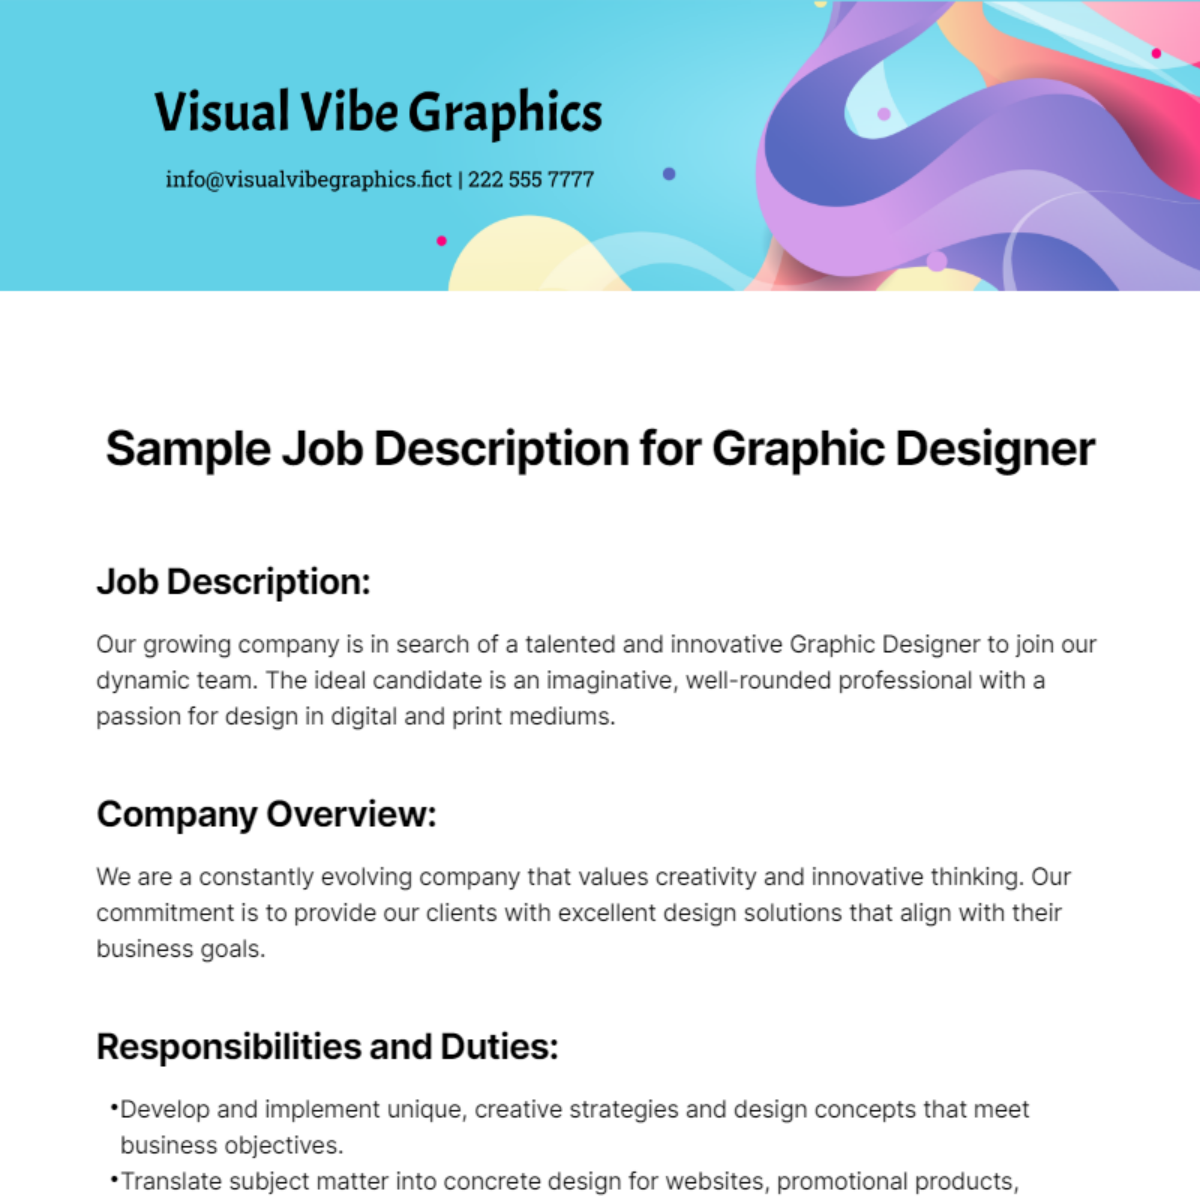 Sample Job Description for Graphic Designer Template